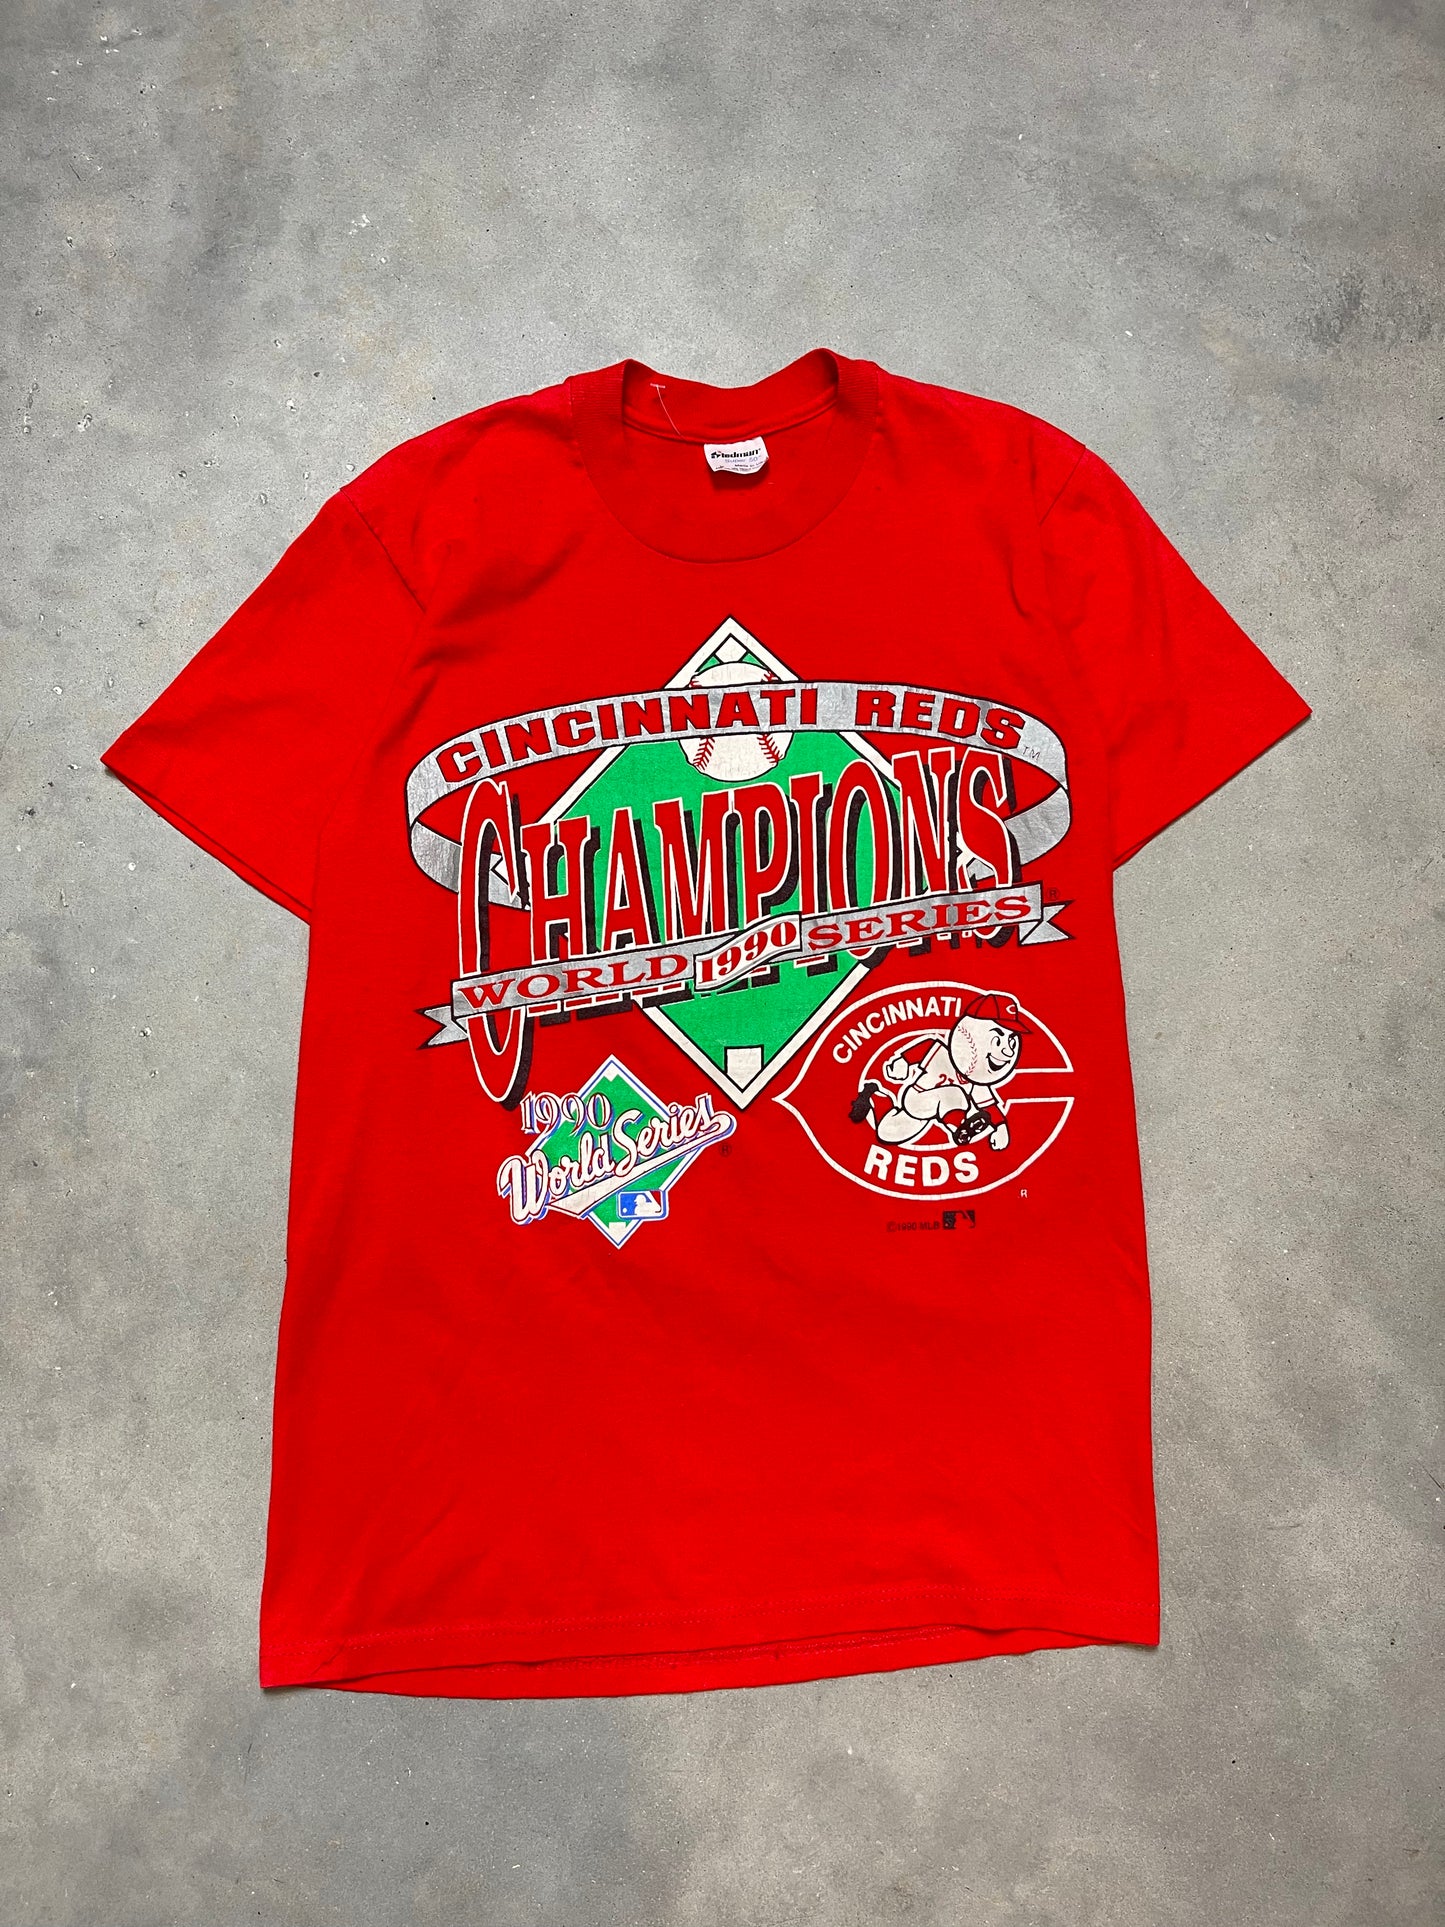 1990 Cincinnati Reds World Series Champions Vintage MLB Tee (Small)